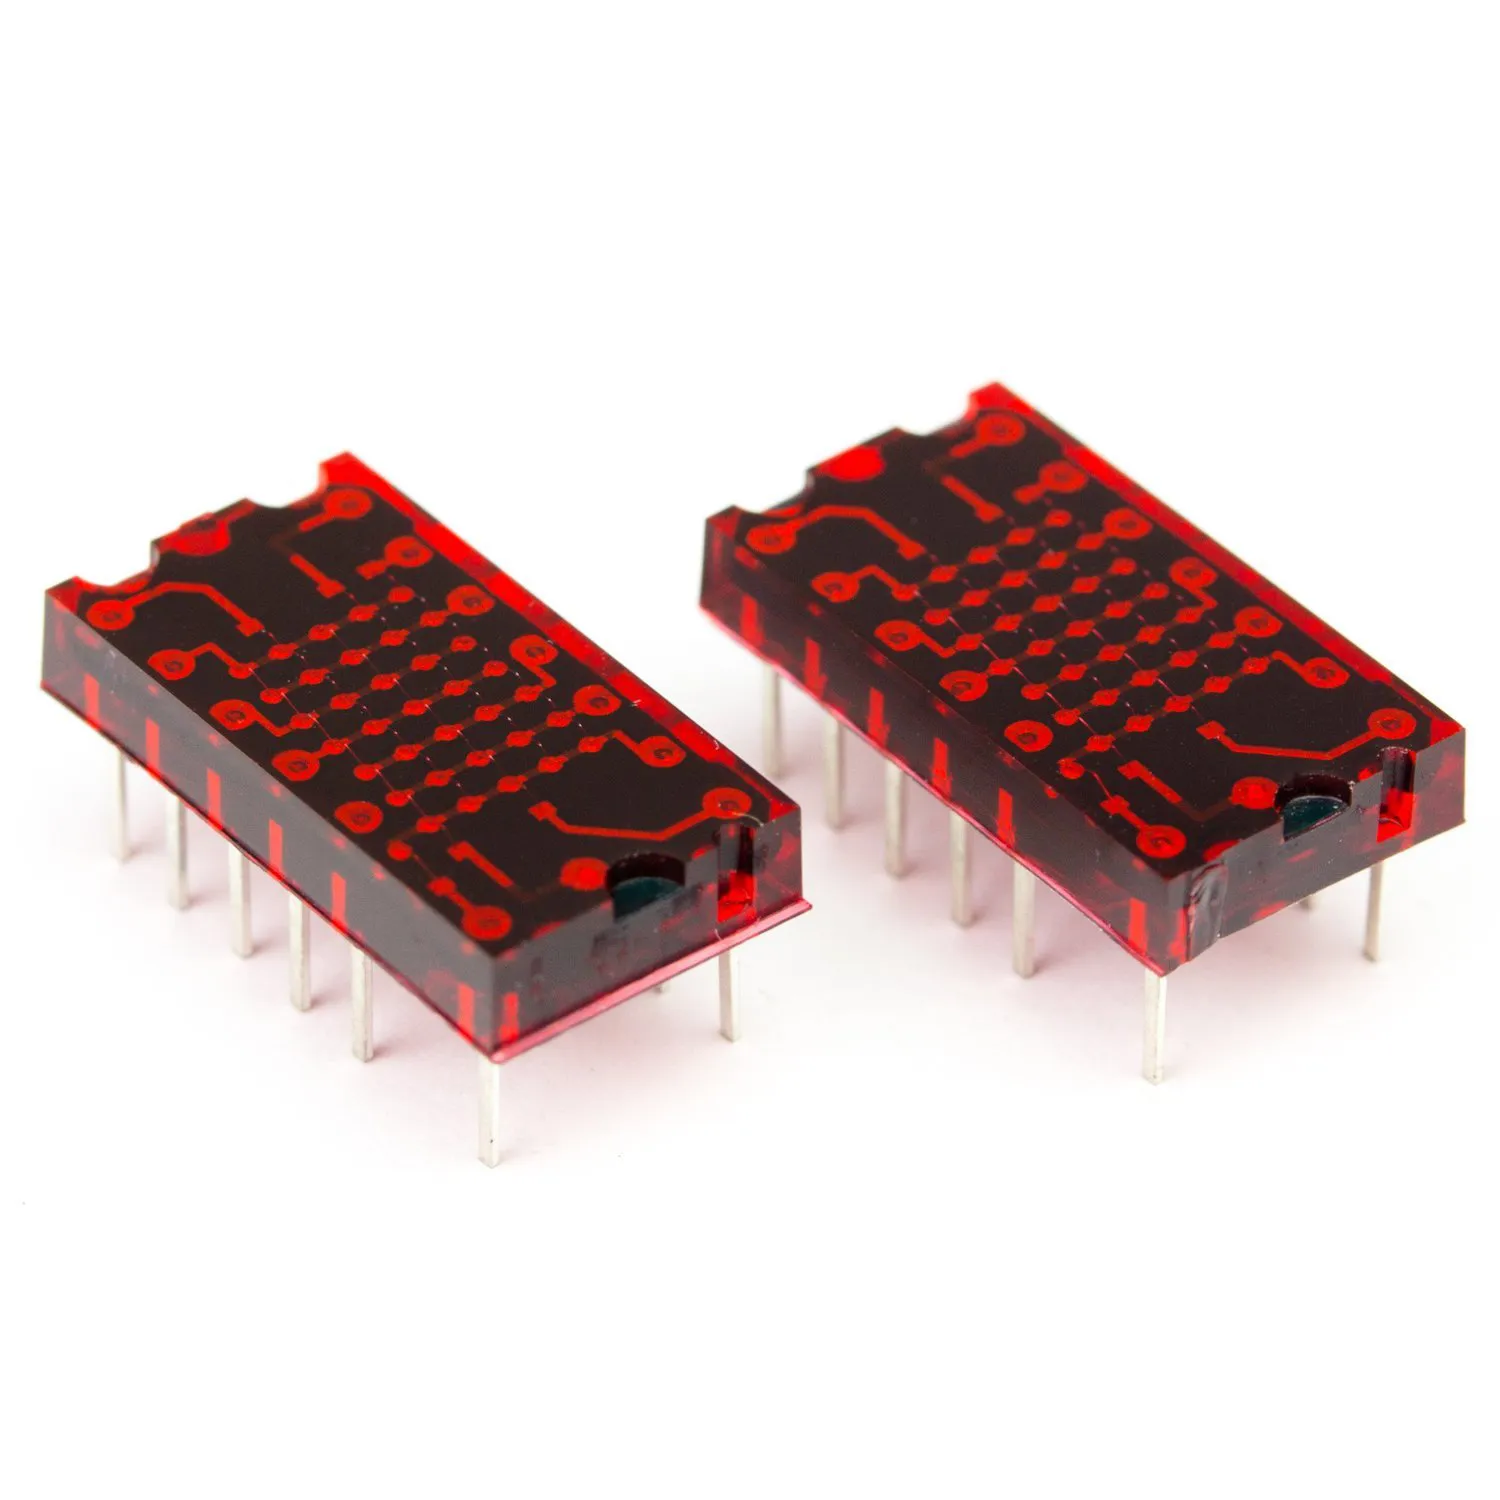 Photo of LTP-305 LED matrix (pair) - Red